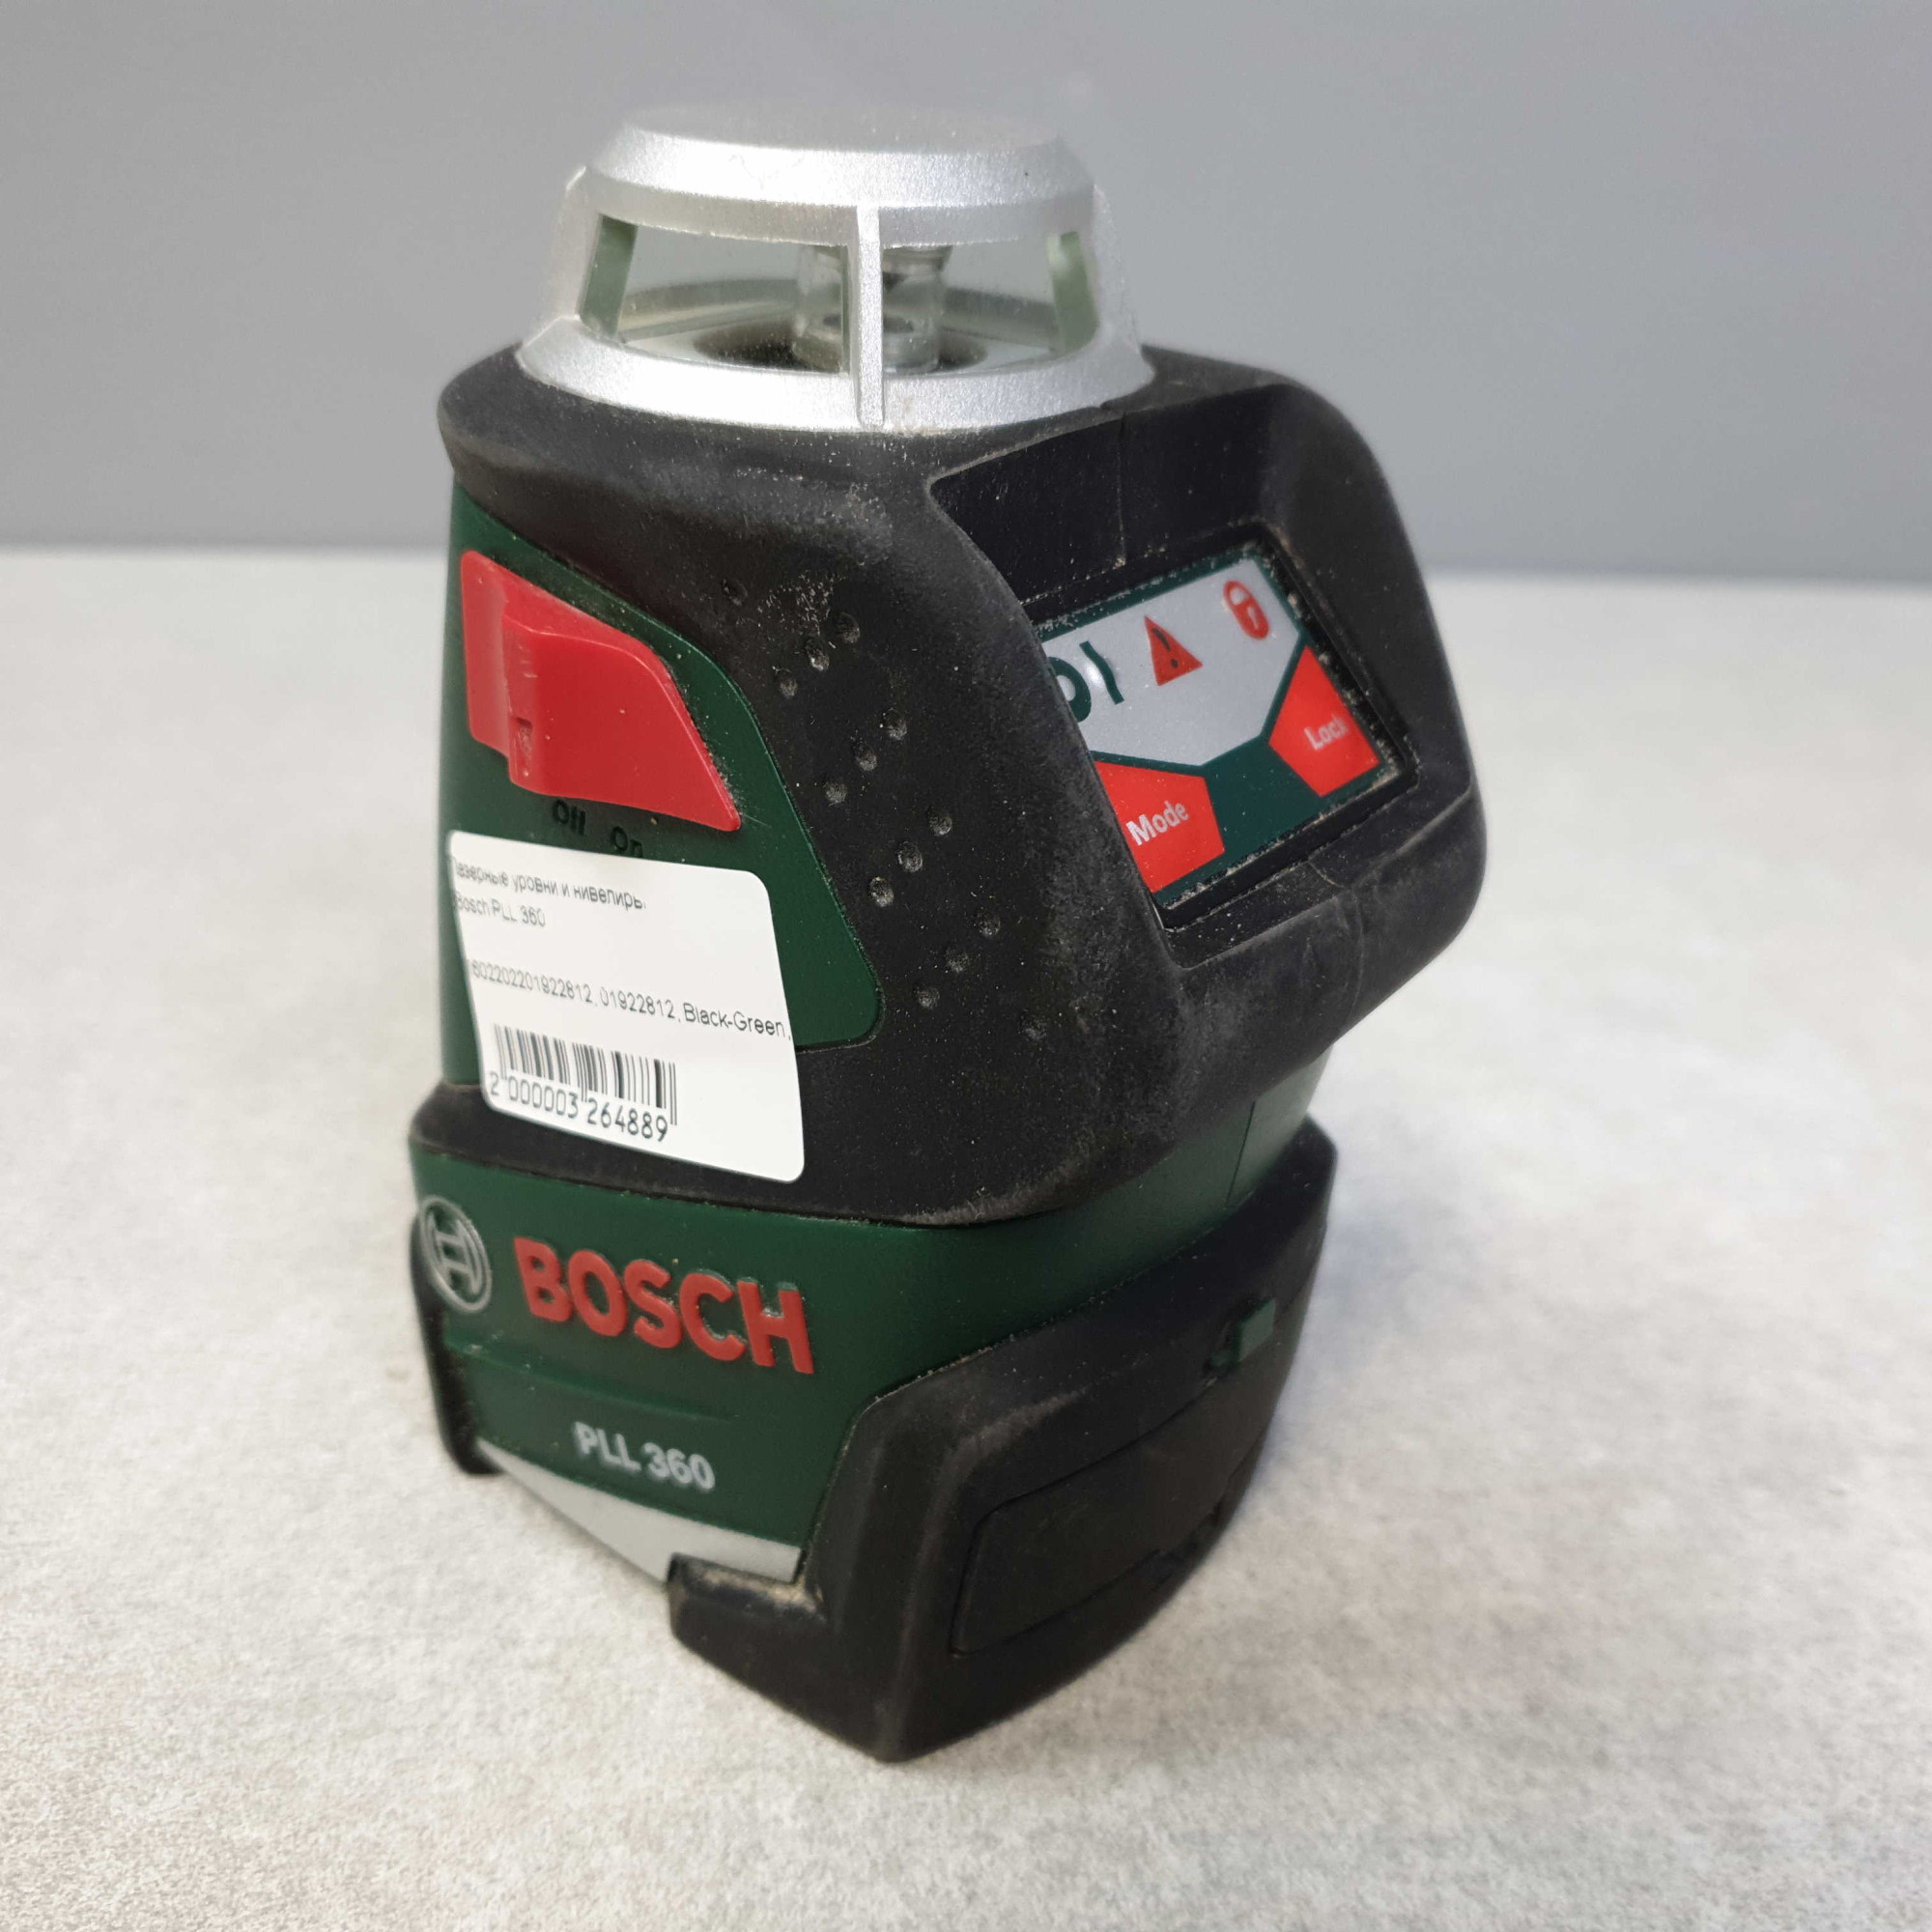 Лазерный нивелир Bosch PLL 360 10